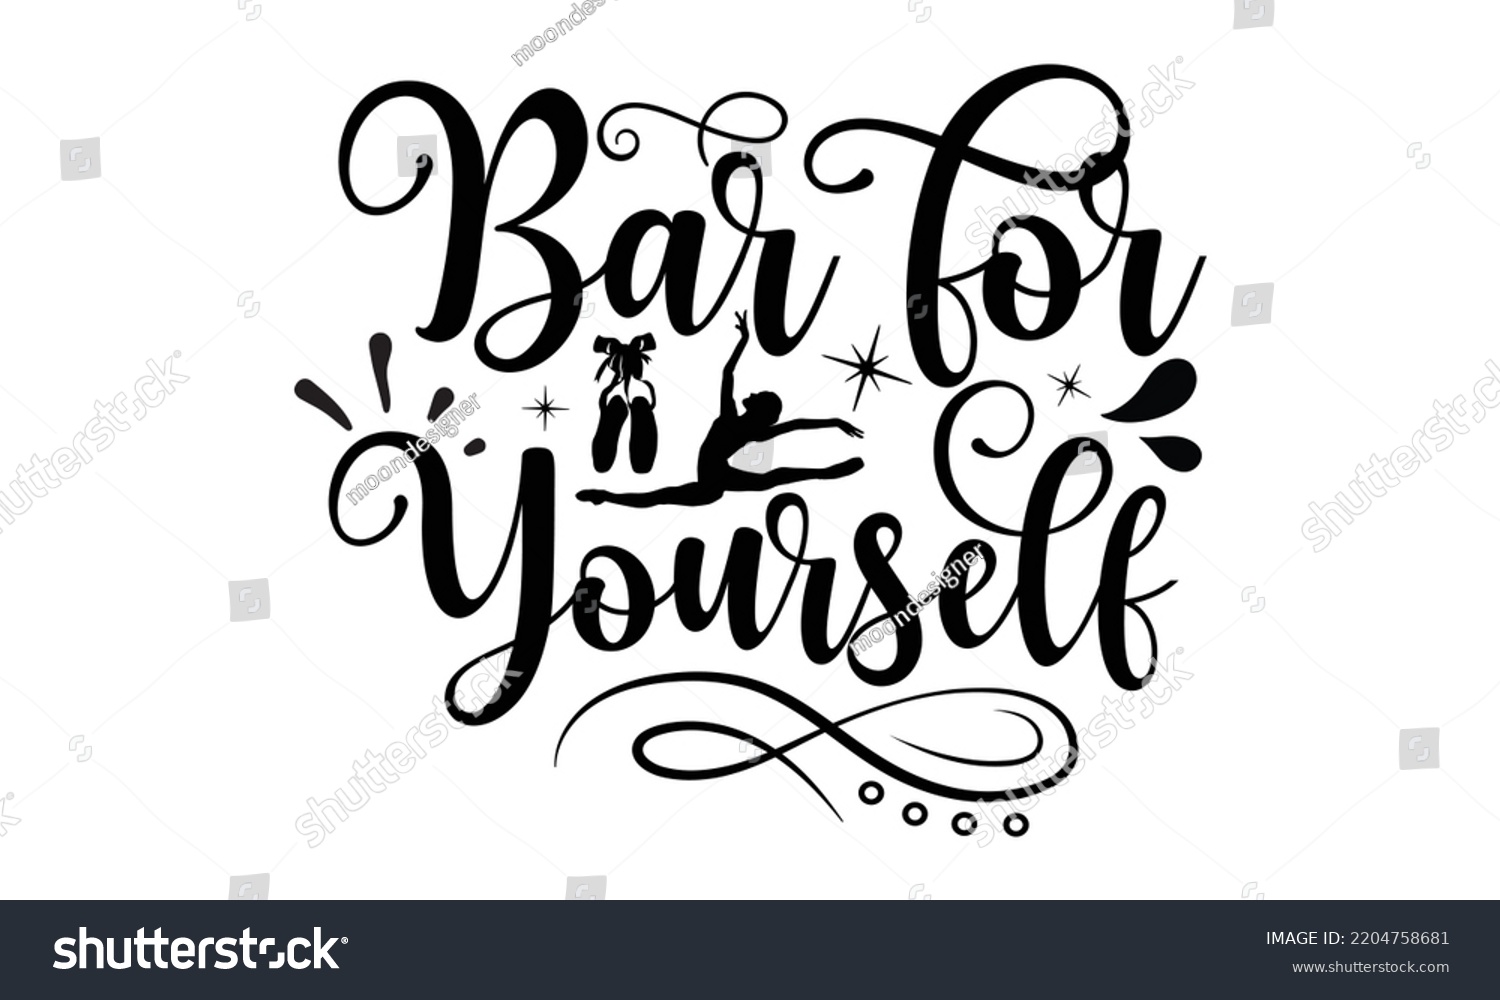 SVG of bar for yourself - Ballet svg t shirt design, ballet SVG Cut Files, Girl Ballet Design, Hand drawn lettering phrase and vector sign, EPS 10 svg